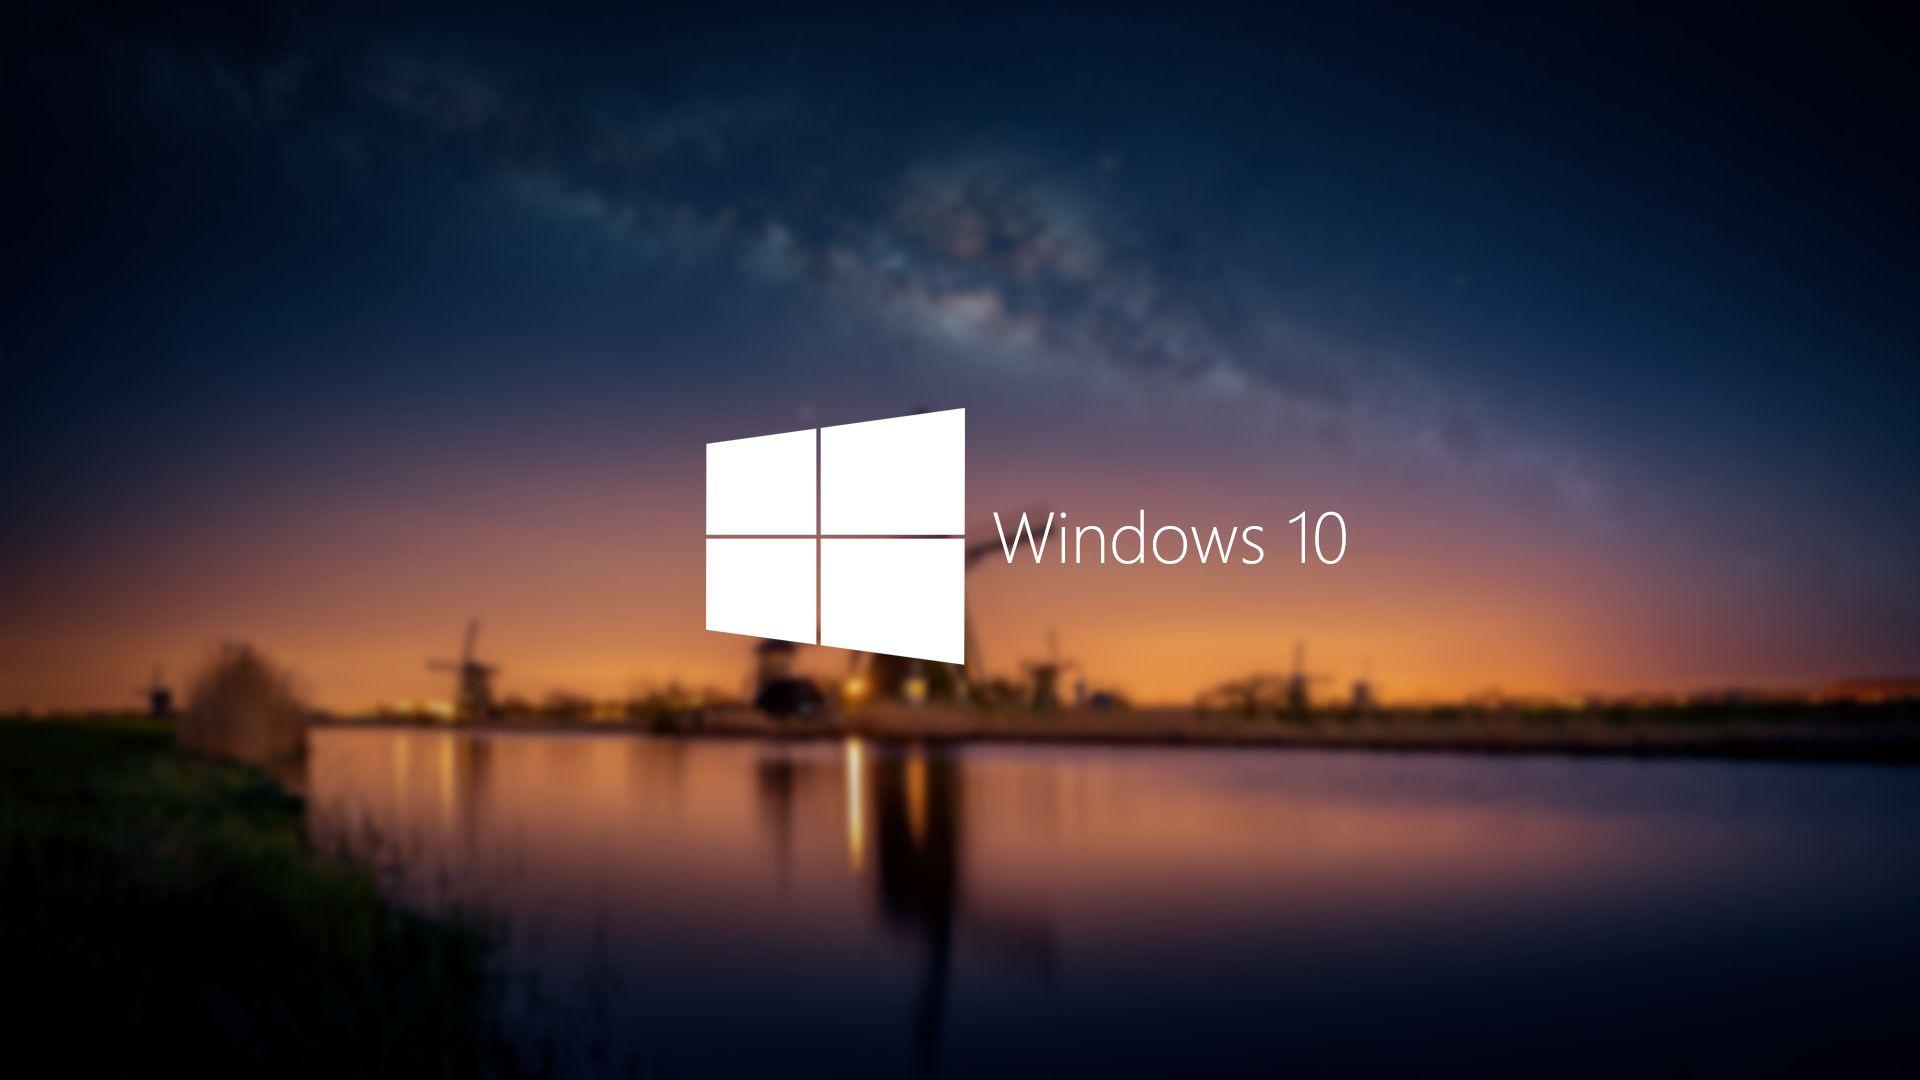 Windows 10 HD Wallpapers